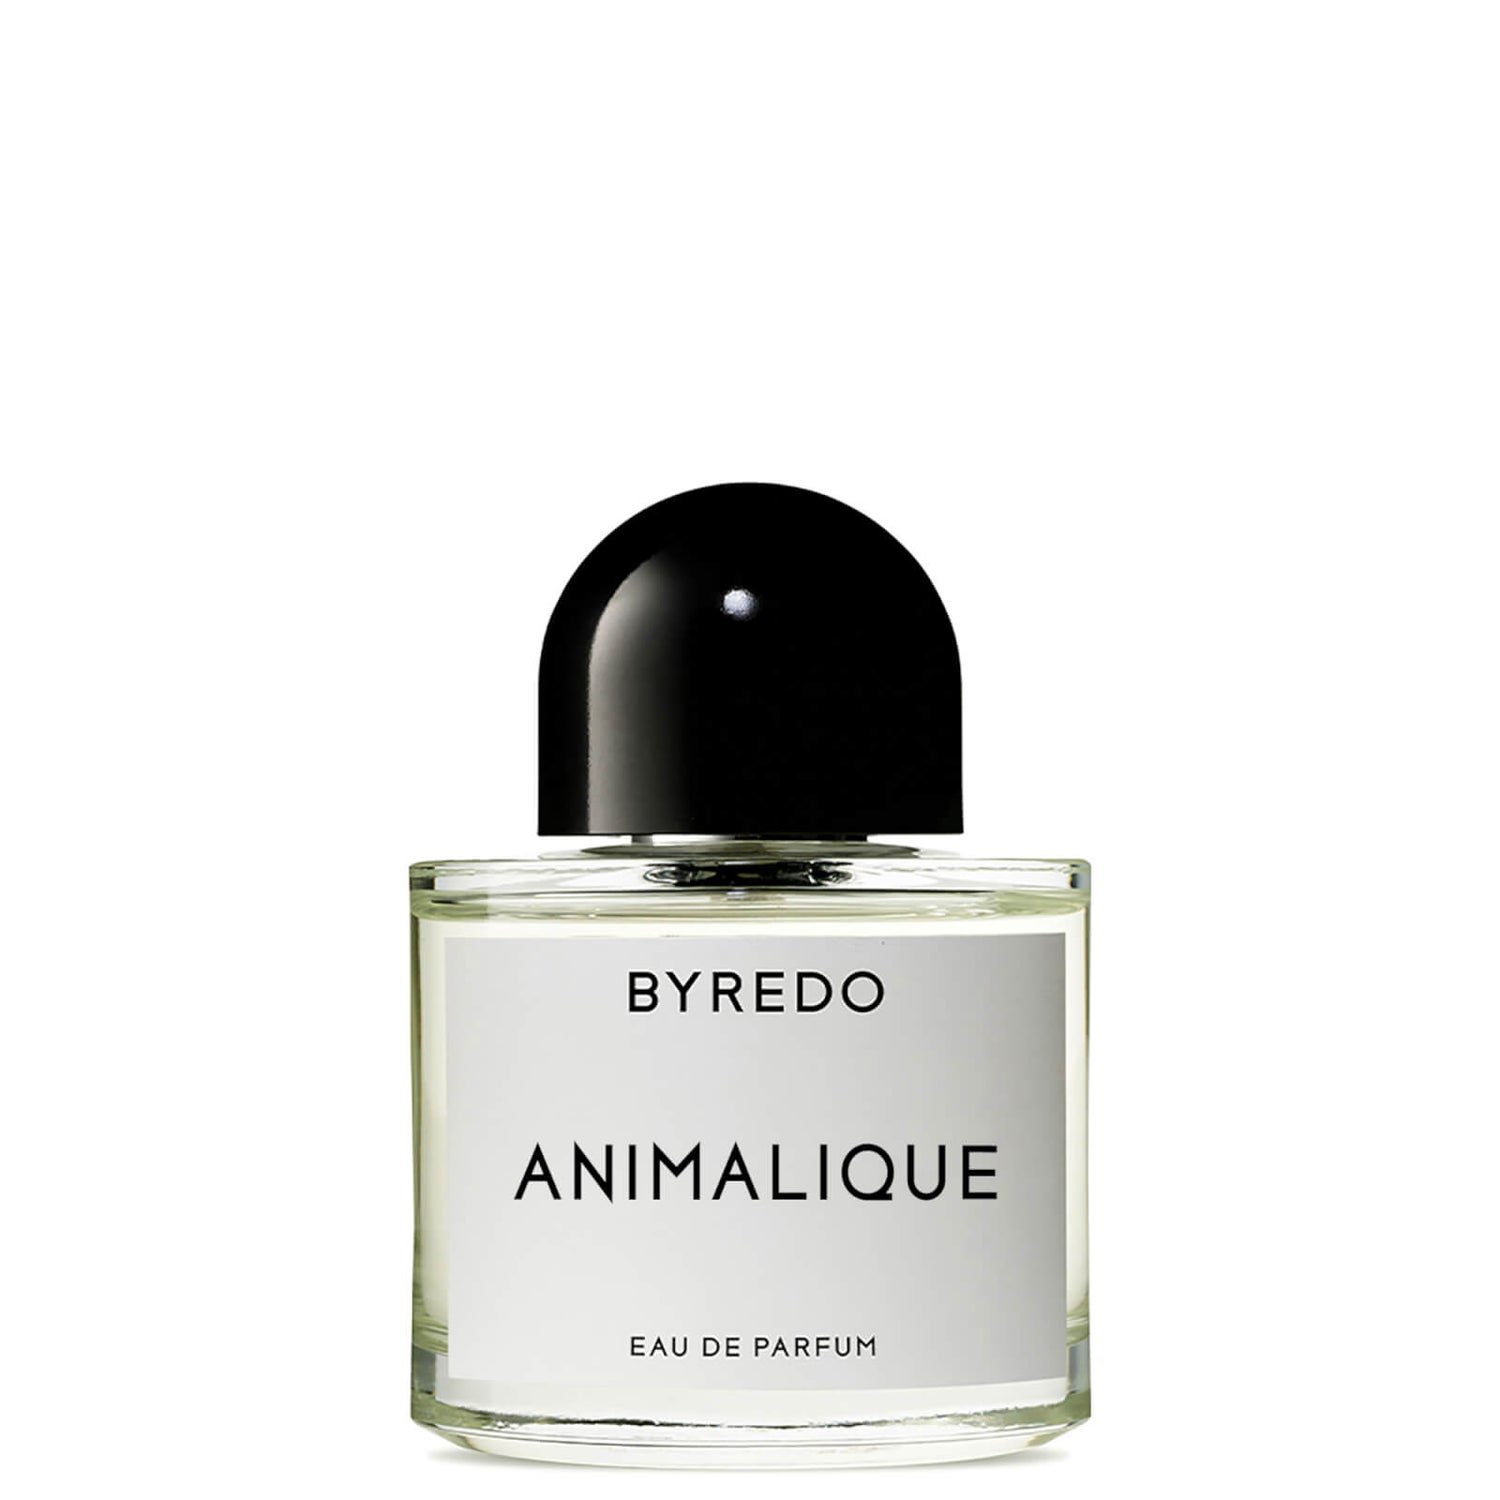 BYREDO Animalique Eau de Parfum 50ml